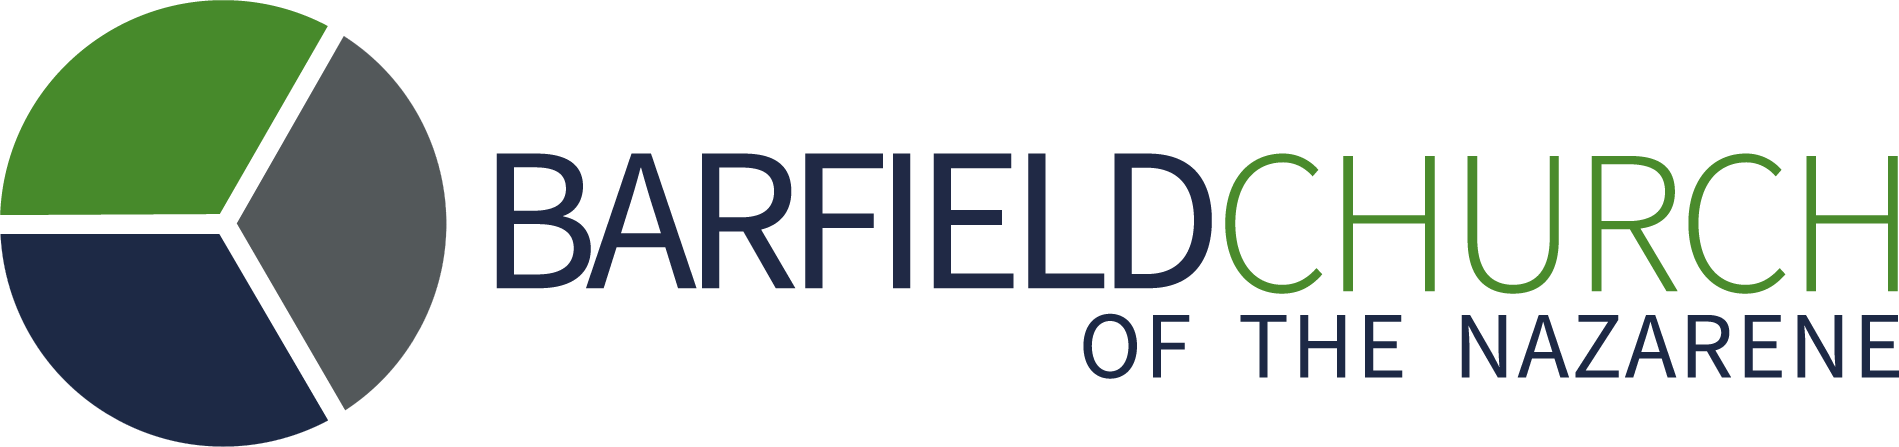 image of Barfield logo